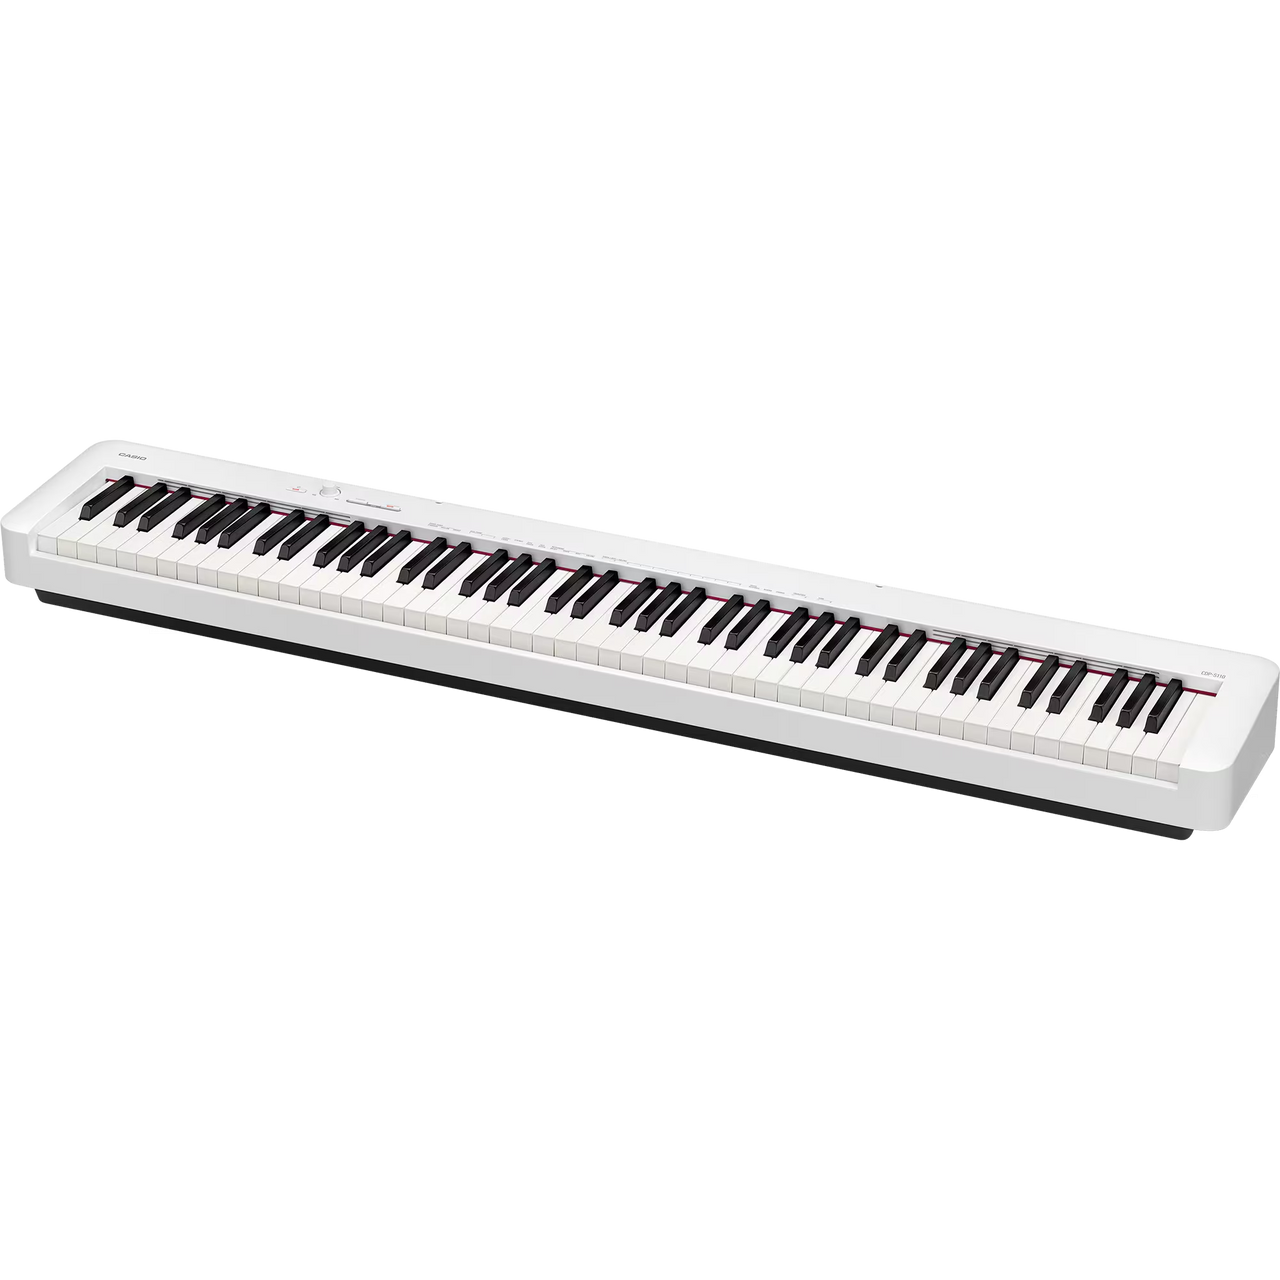 Casio CDP-S110 Digital Piano - White